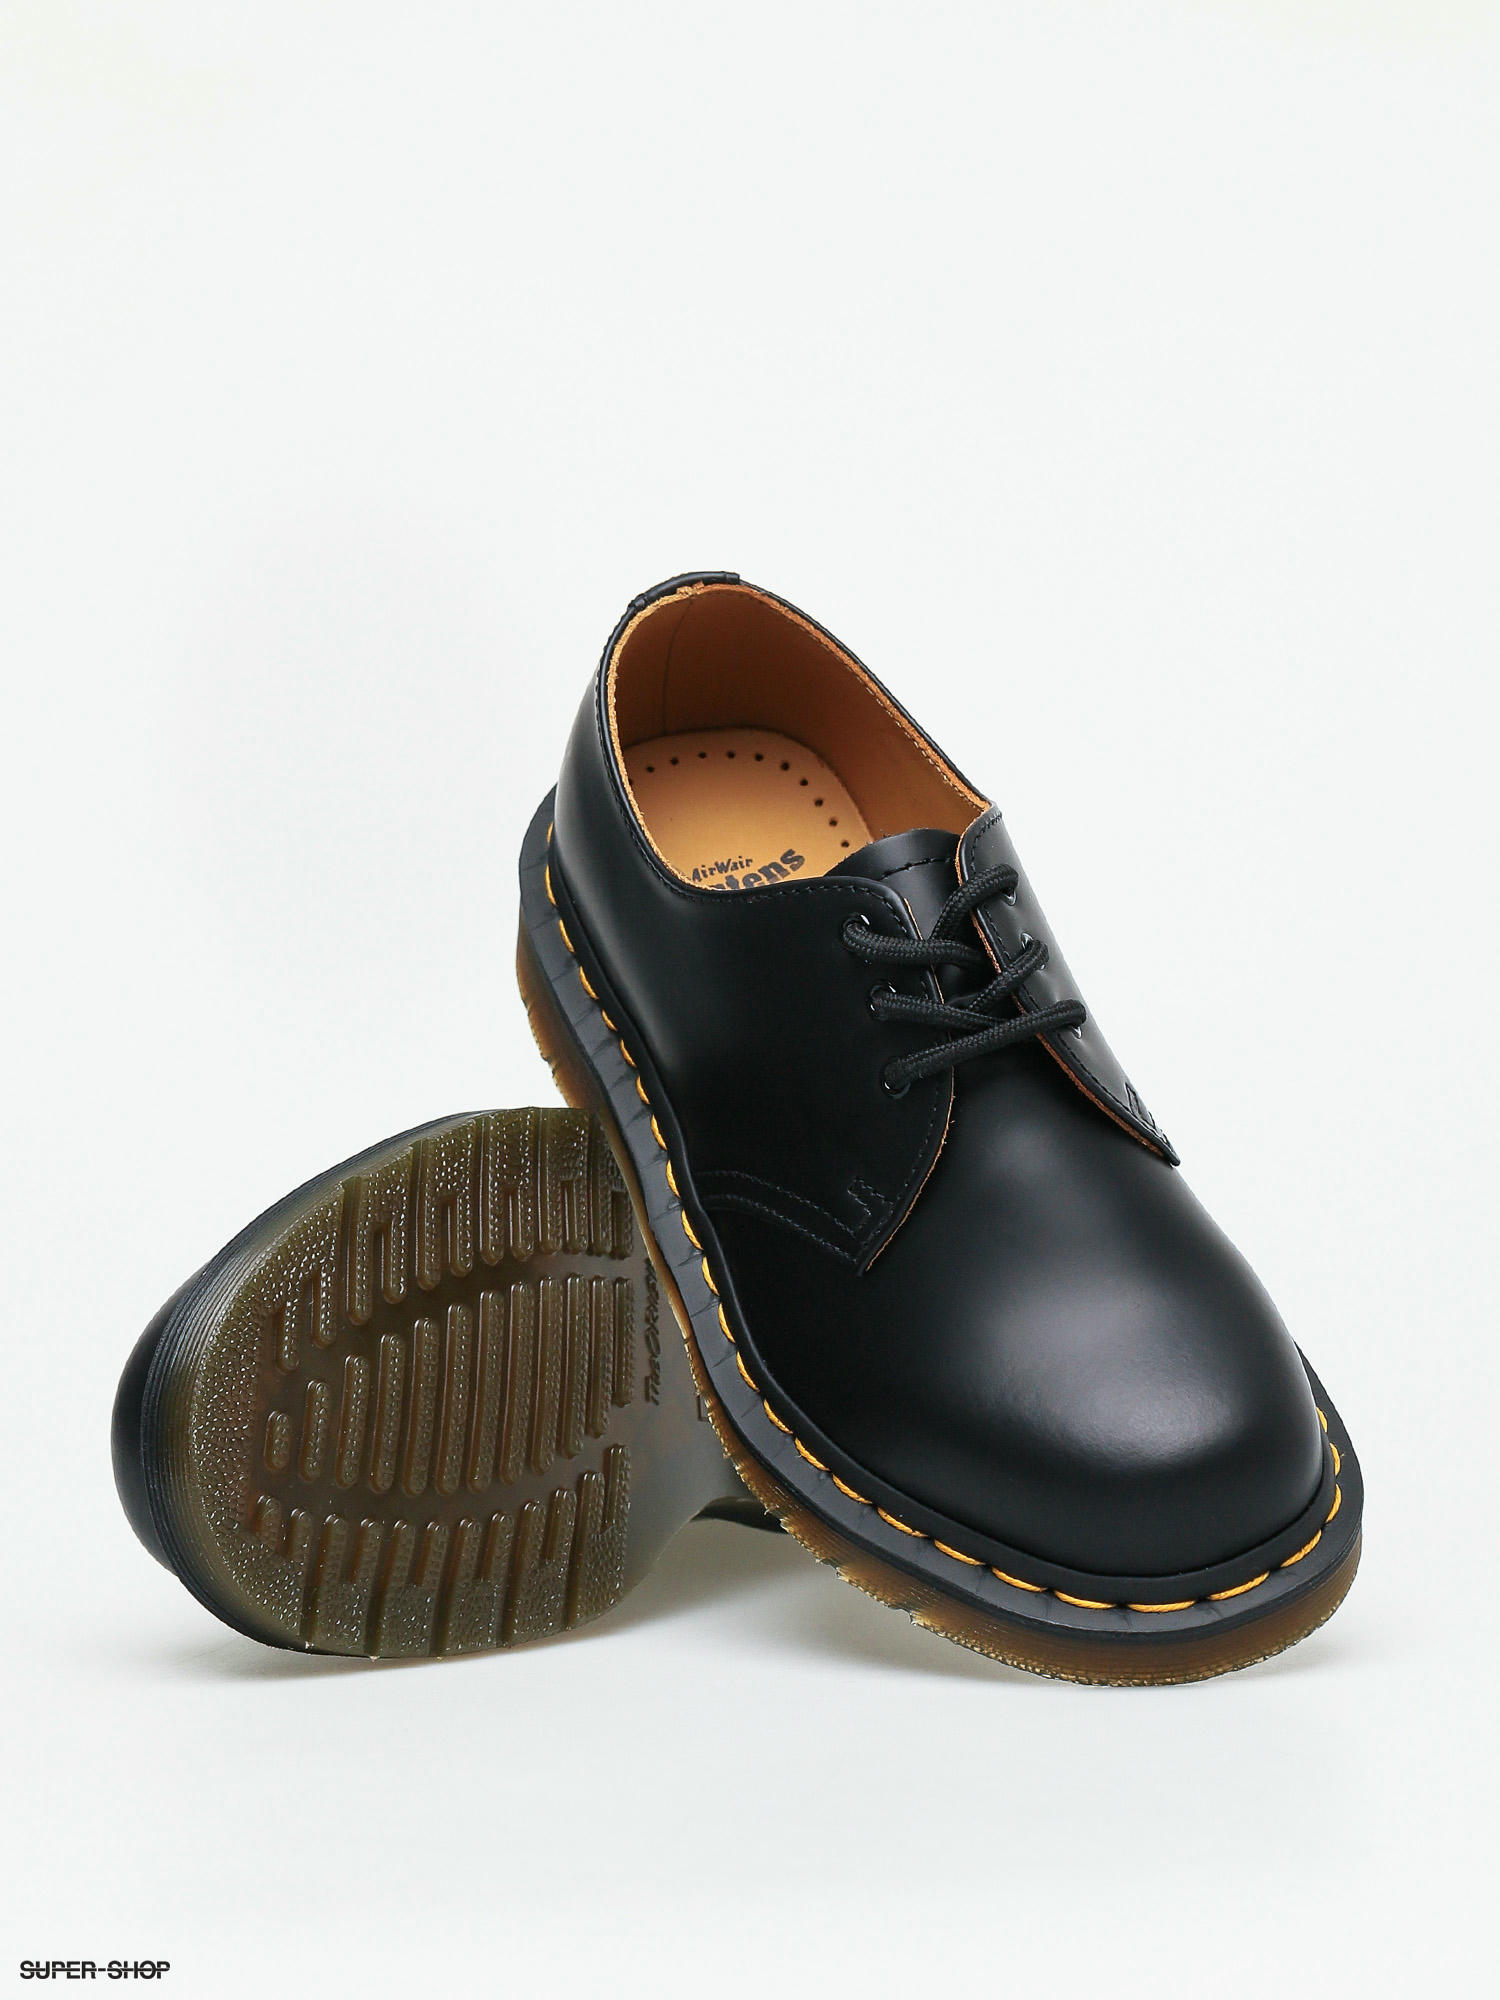 Dr. Martens 1461 59 Shoes (black smooth)